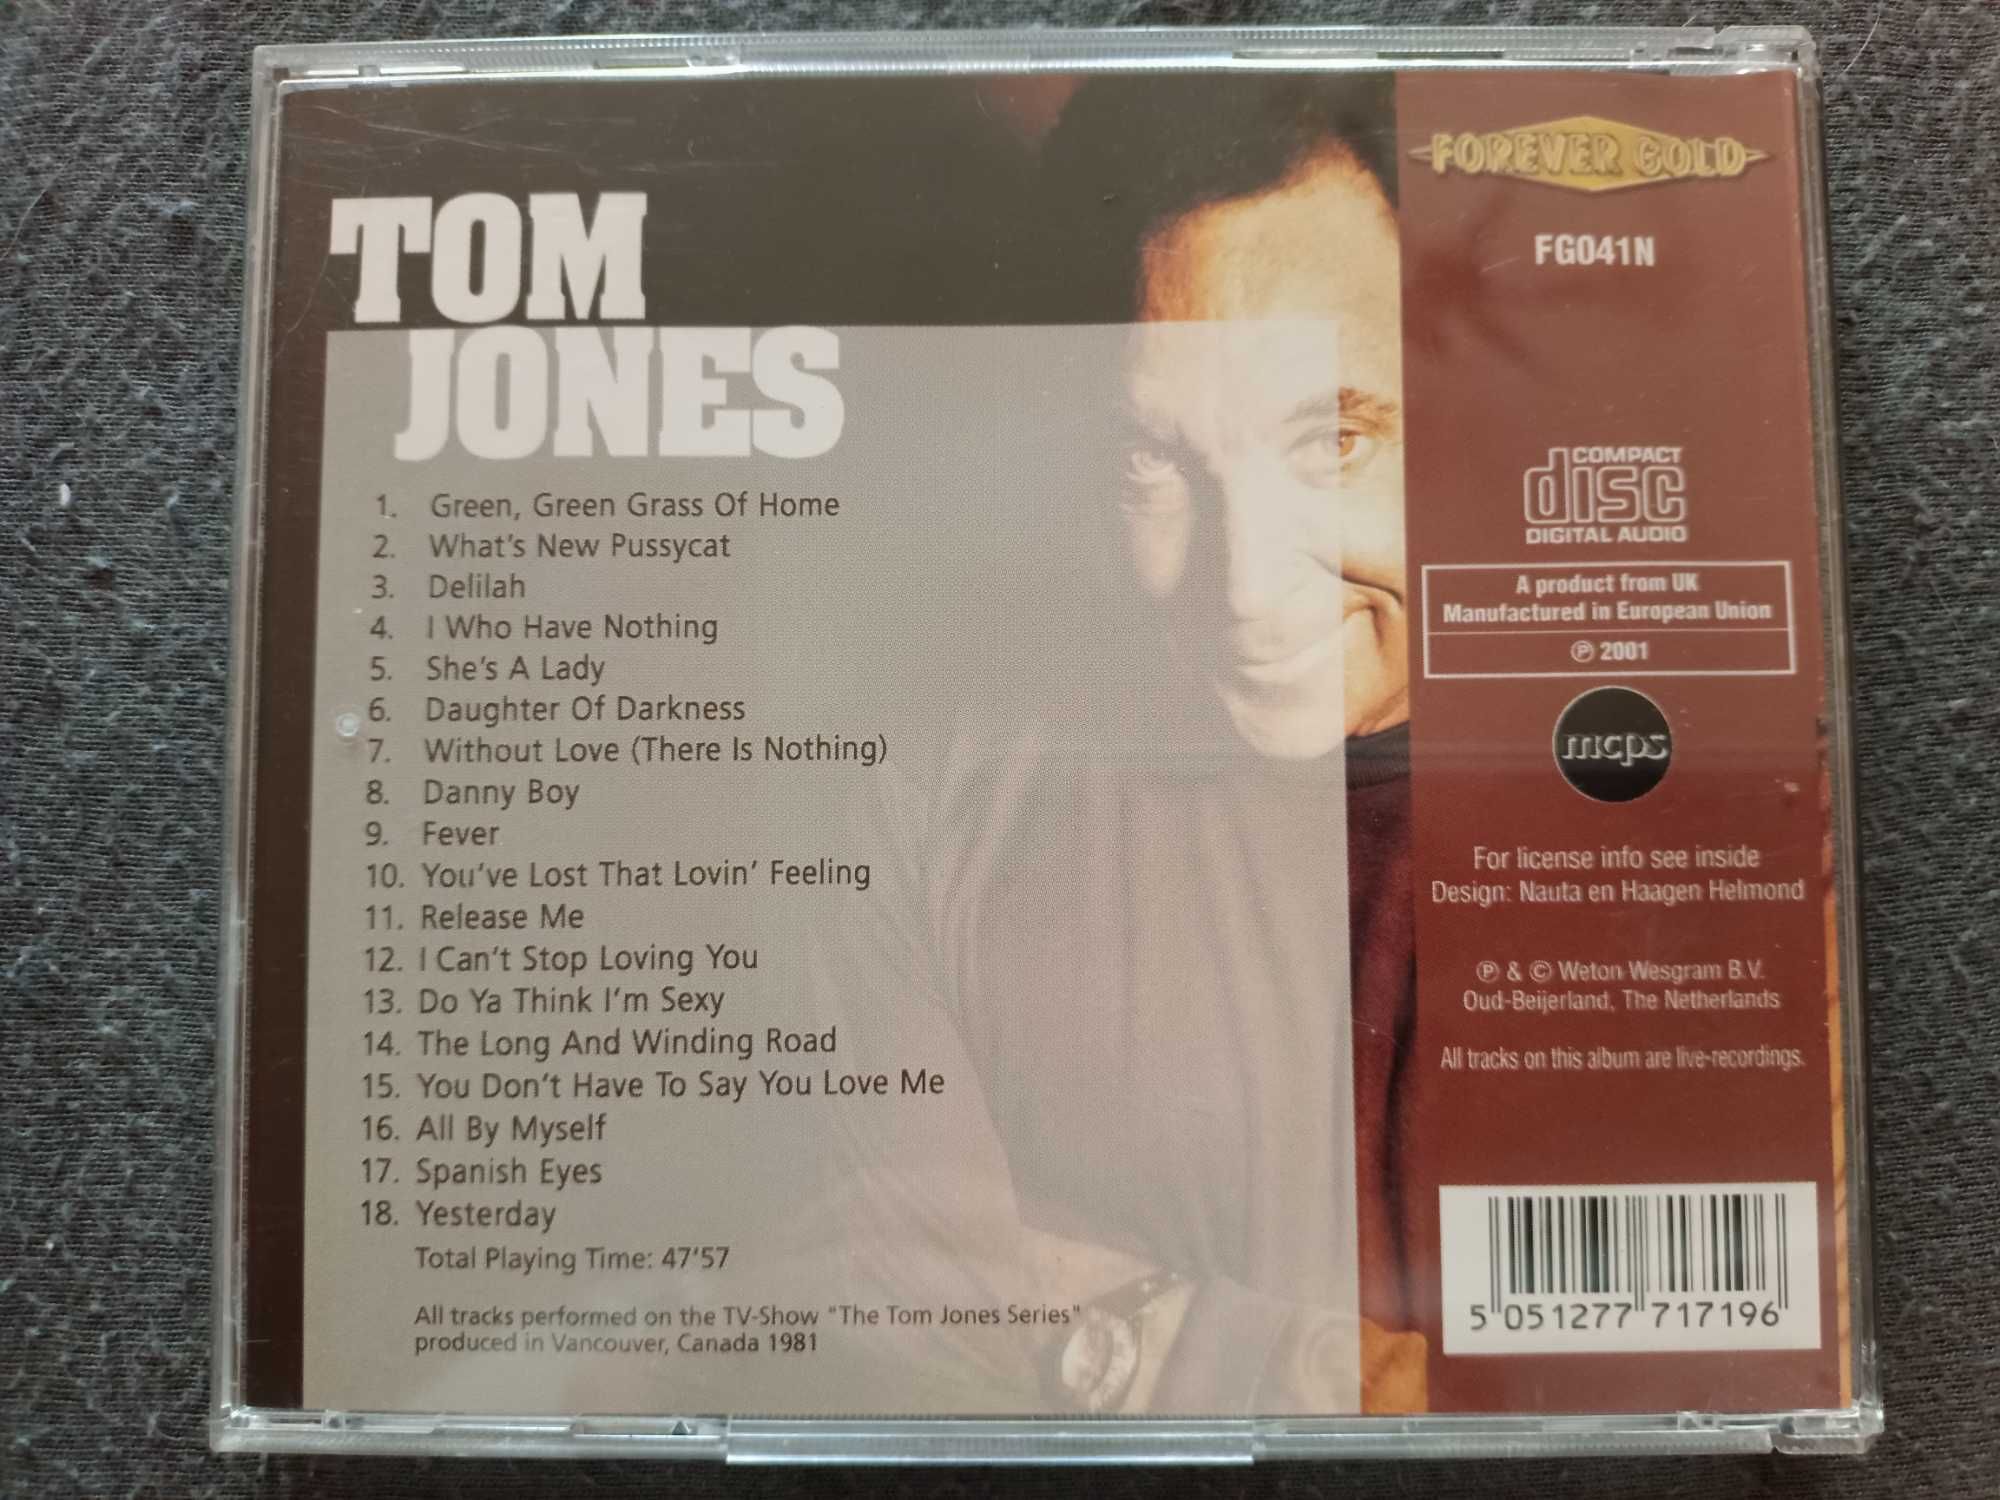 Tom Jones - Live Hits, CD 6/6, Delilah, She's a Lady, Yesterday, Fever